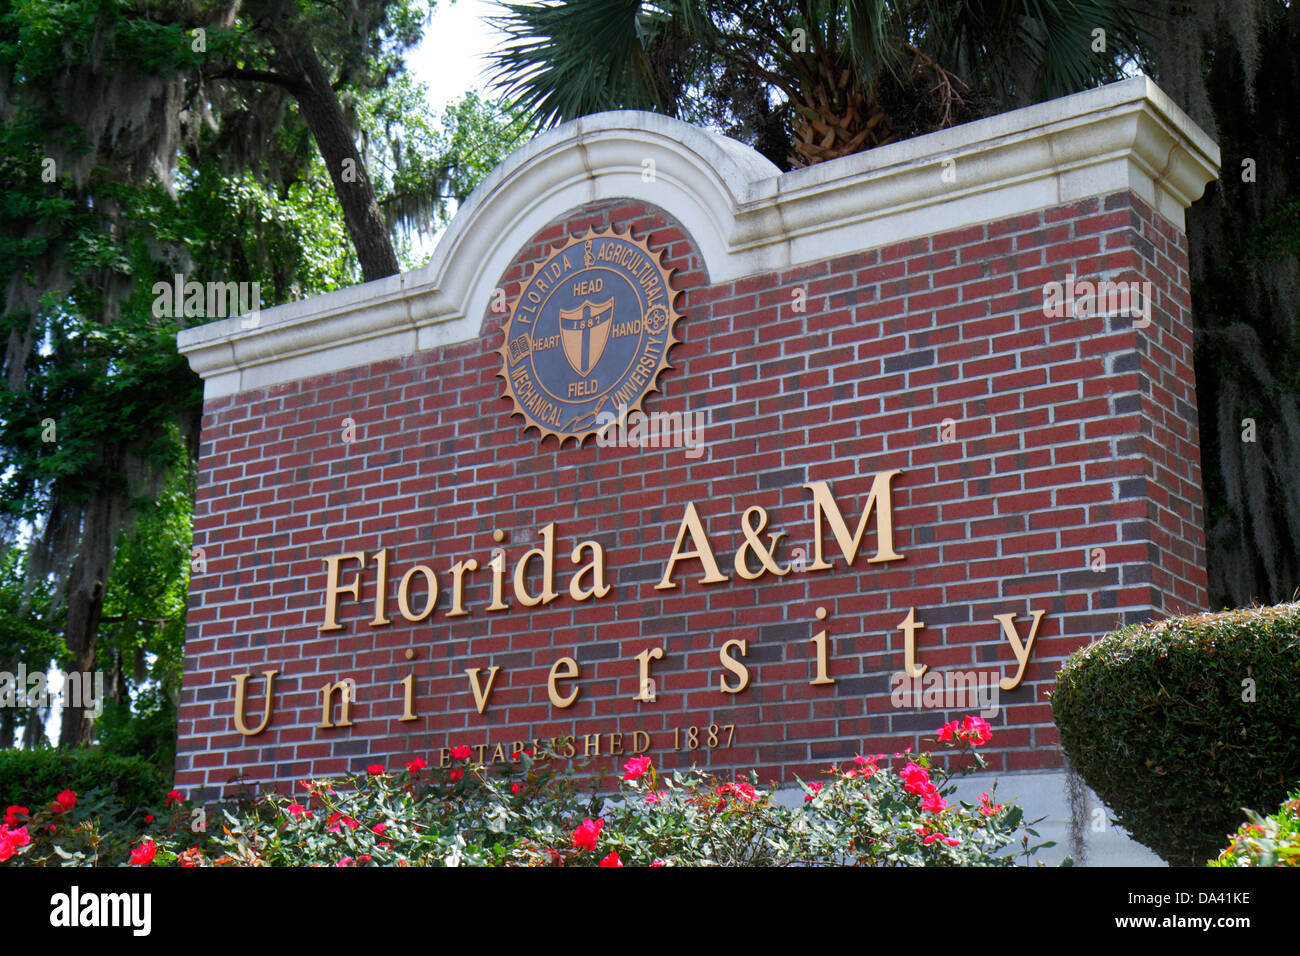 Florida A & M University